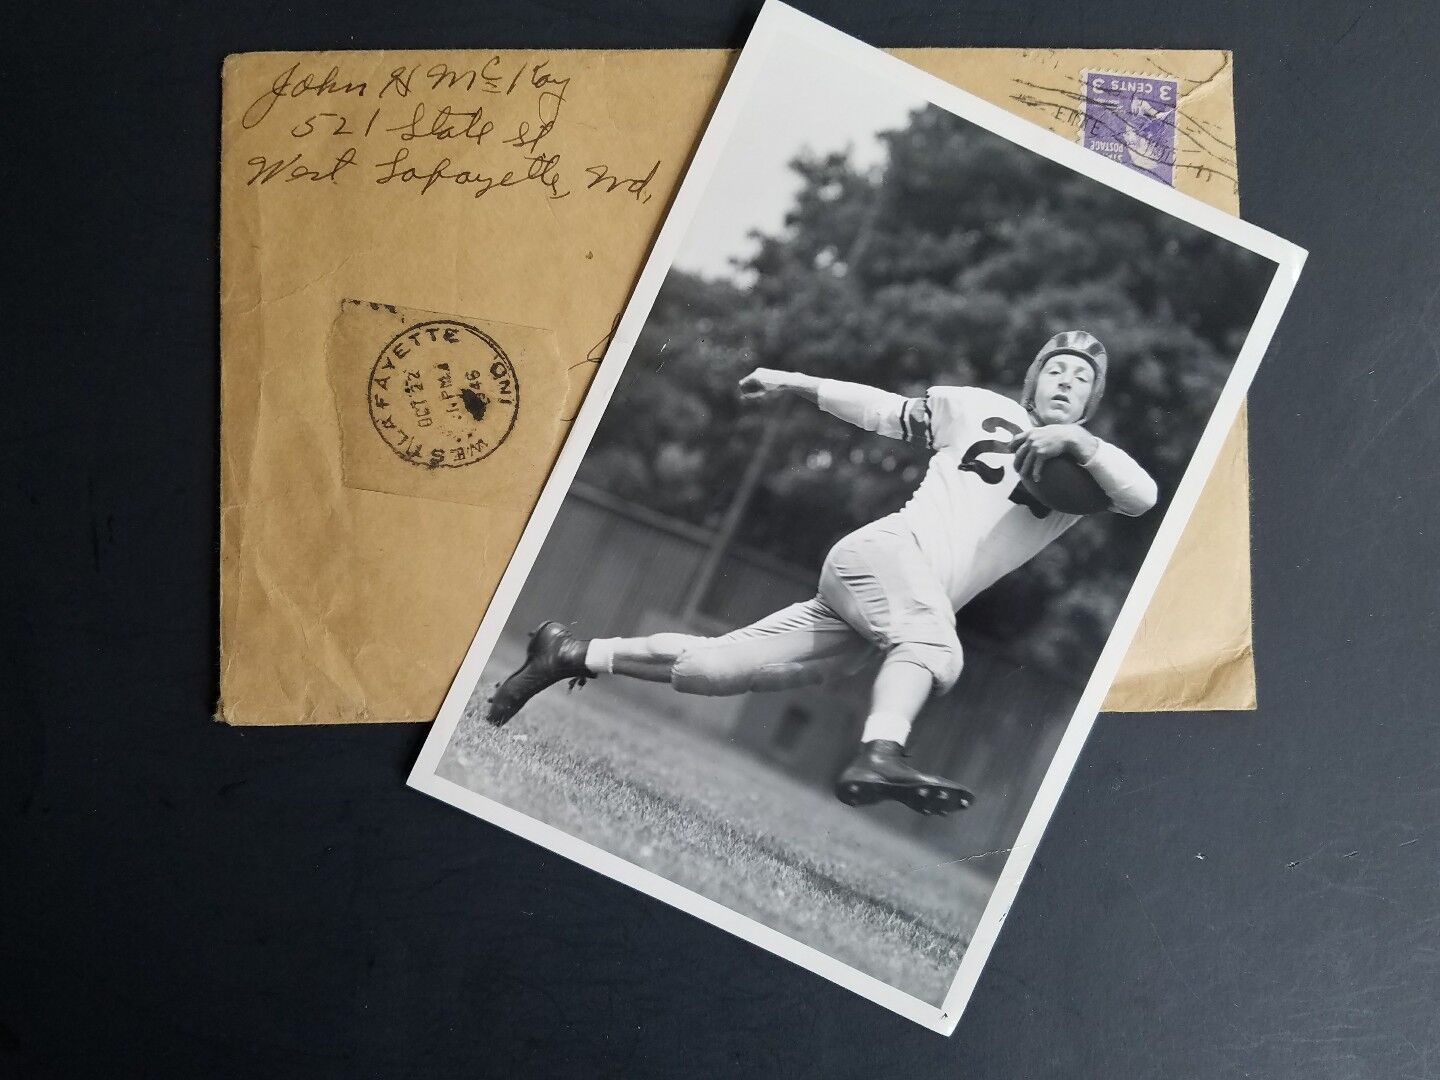 1946 John McKay Purdue University football photo photograph signed envelope